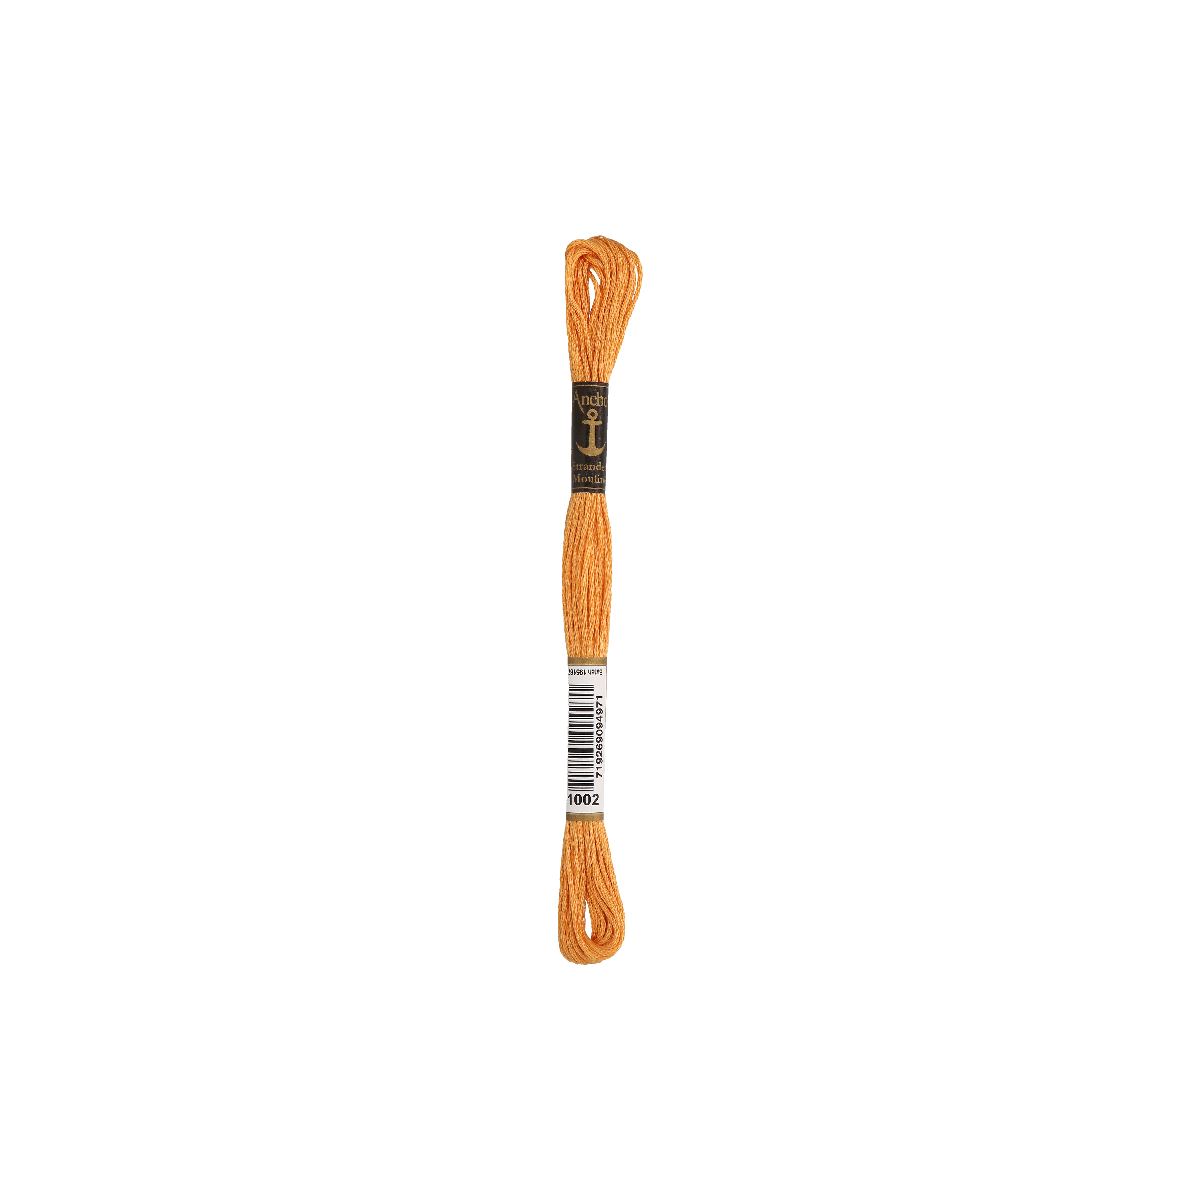 Anchor Sticktwist 8m, marrón-naranja claro,...